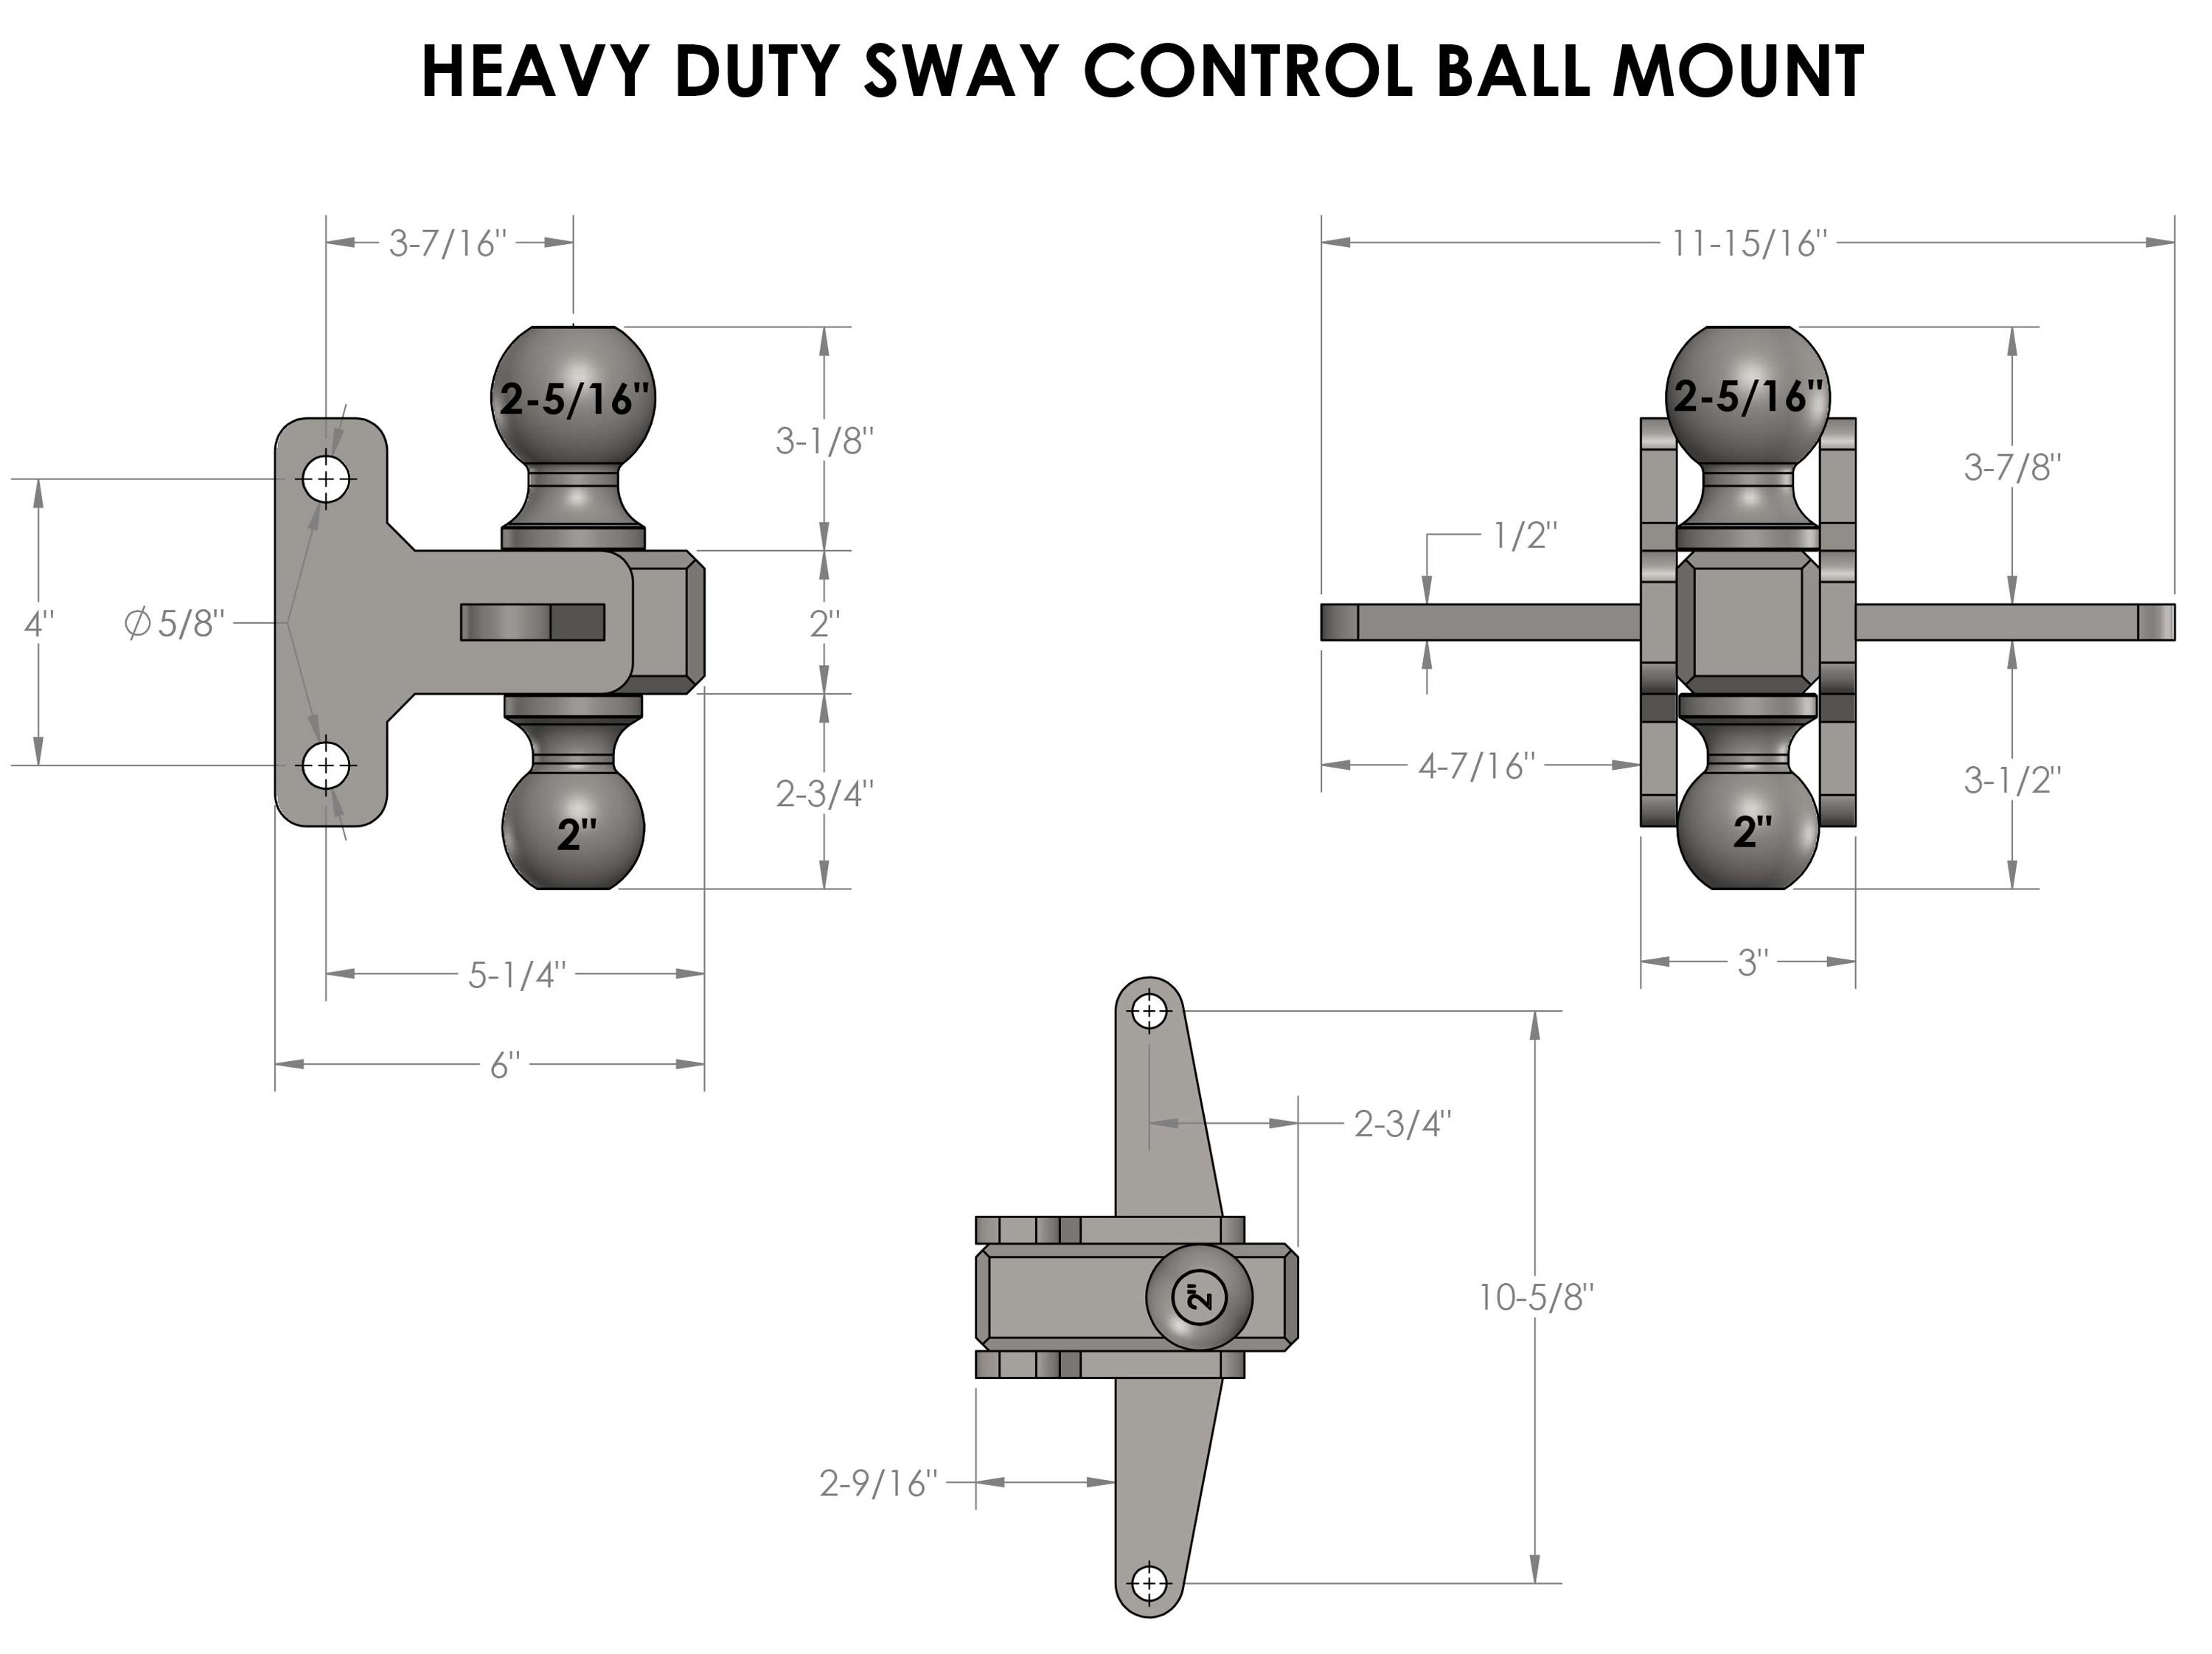 BulletProof Hitches Heavy Duty Sway Ball Mount Specs